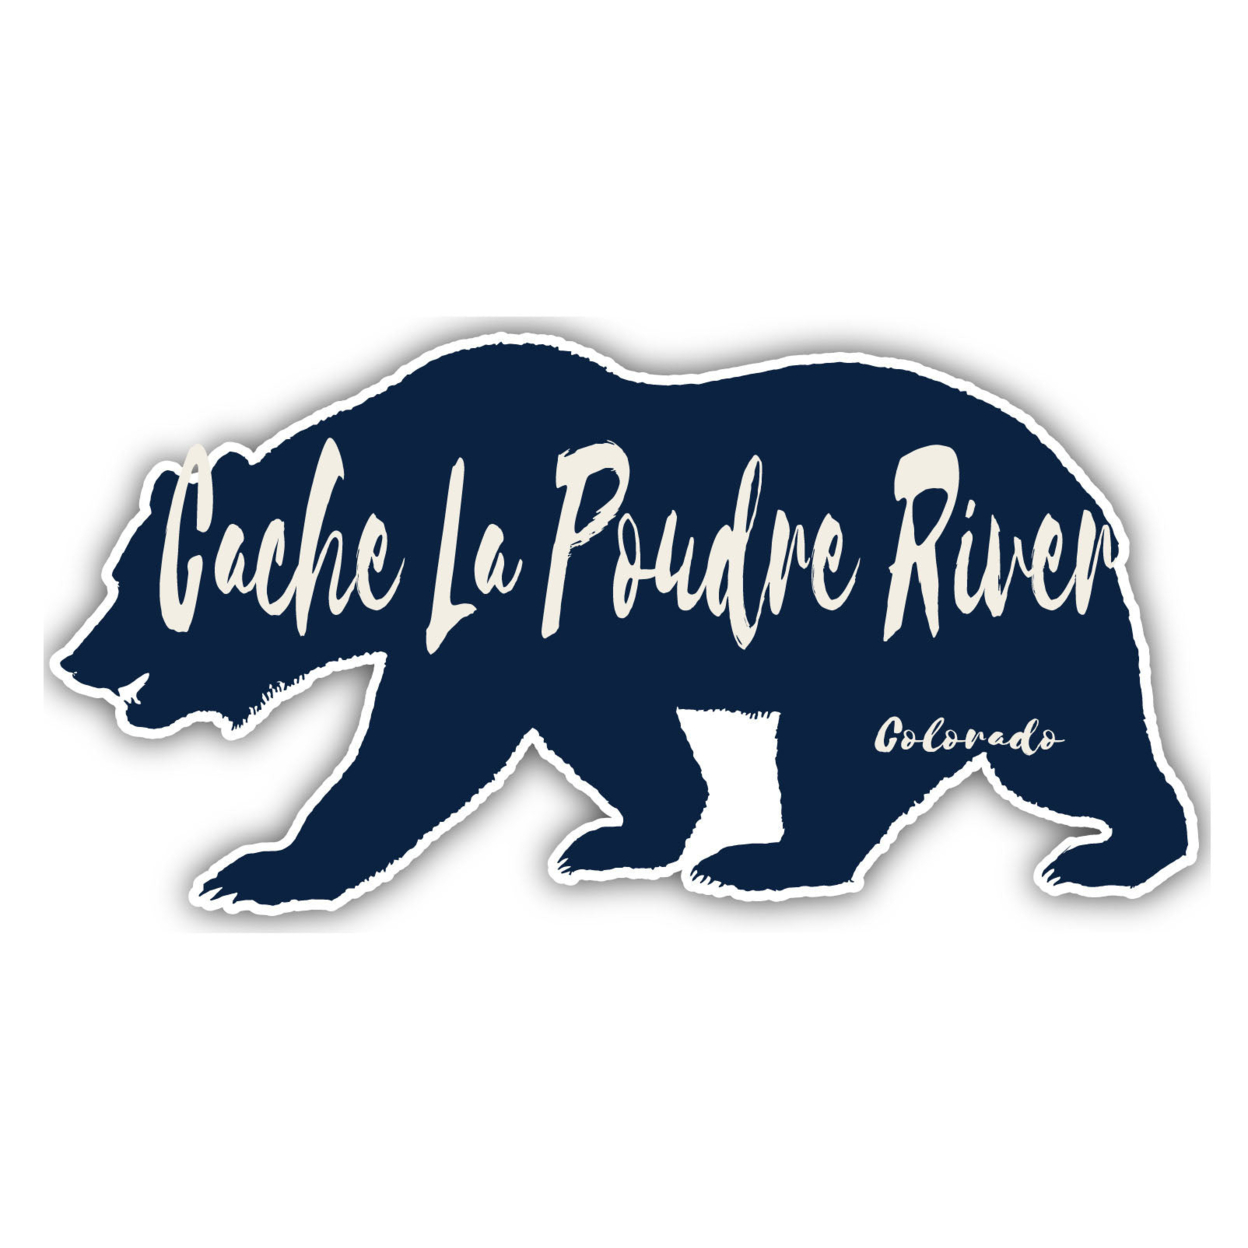 Cache La Poudre River Colorado Souvenir Decorative Stickers (Choose Theme And Size) - Single Unit, 2-Inch, Camp Life